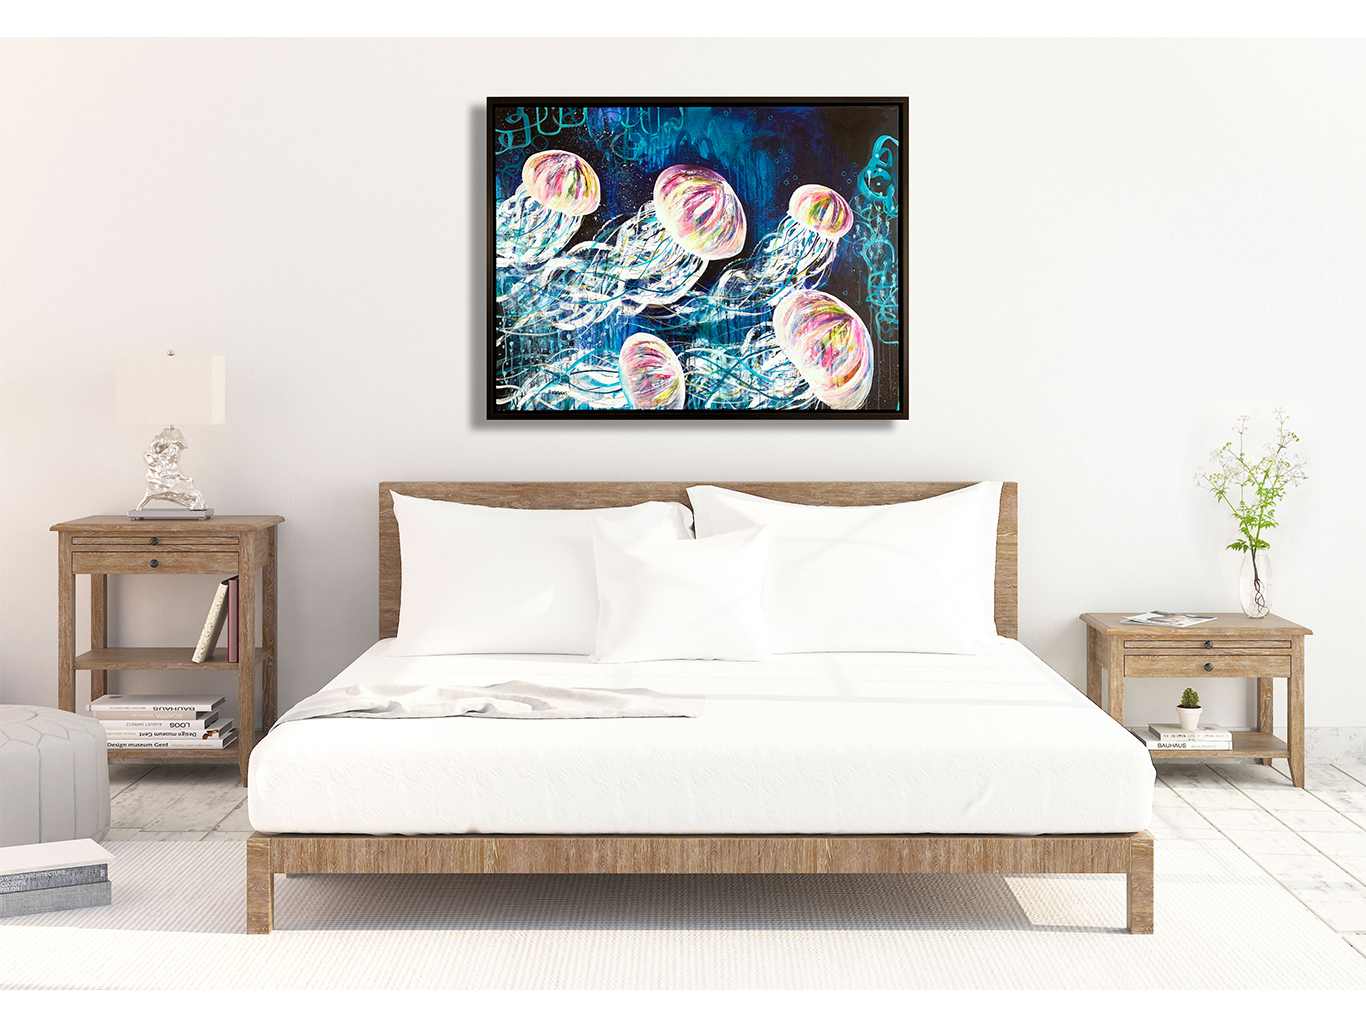 AM 109 Mesusas acrylic - painting - canvas - ocean - jellyfishes - medusas - colorful - art decor - black - floater- frame - Audree Marsolais (1)